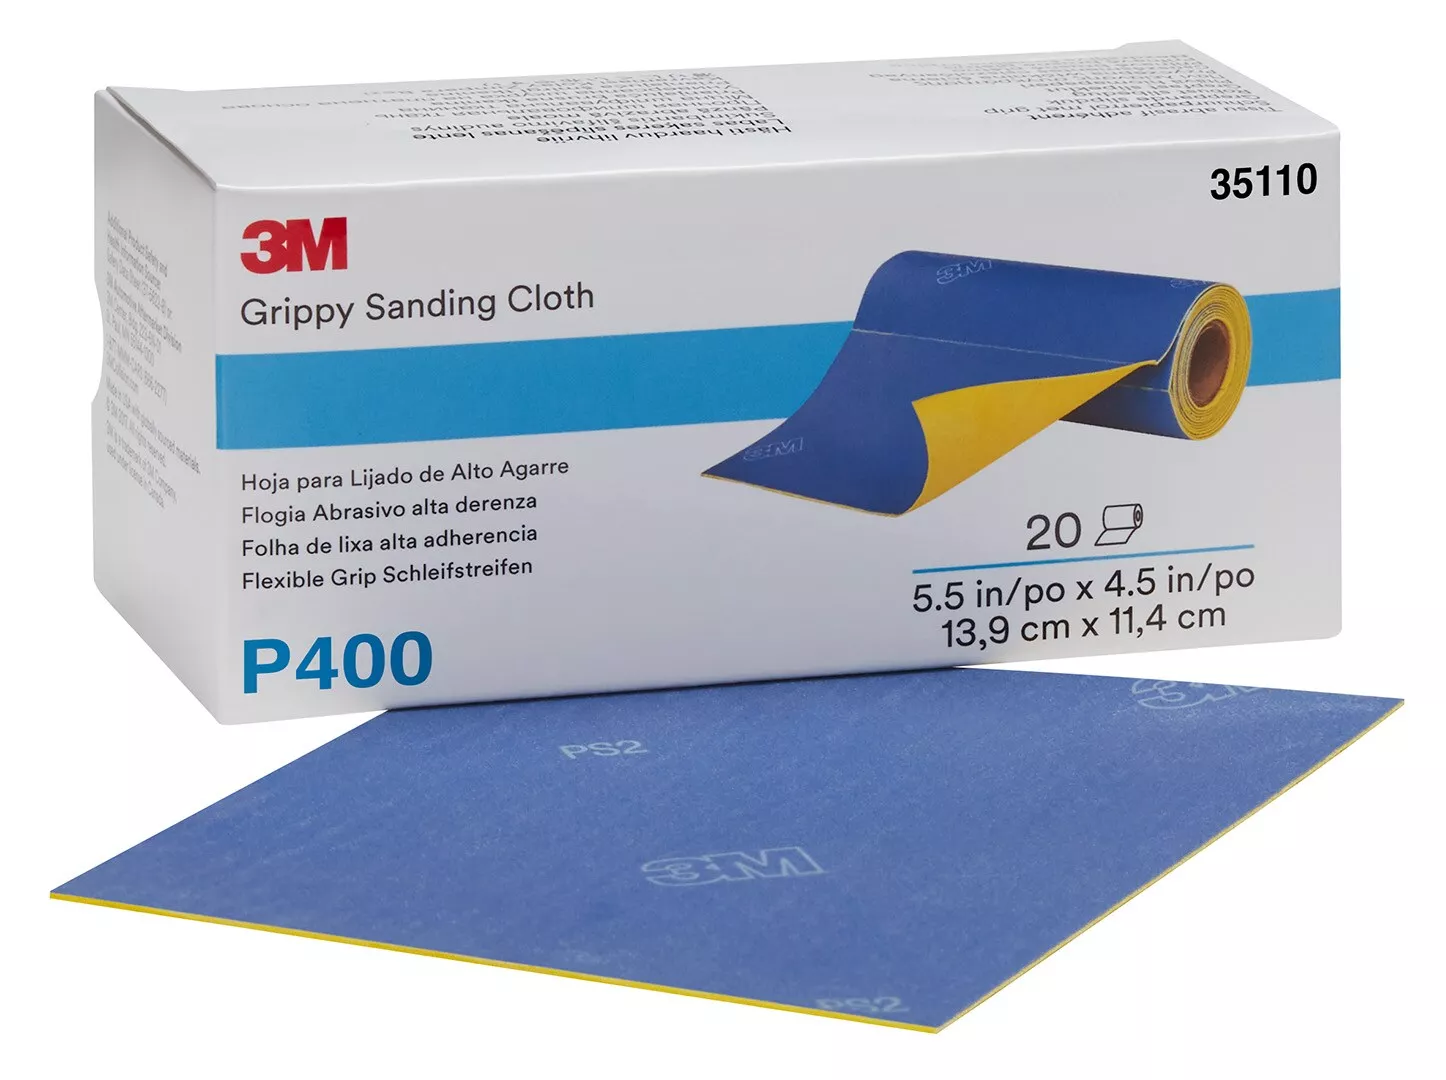 SKU 7100142932 | 3M™ Grippy Sanding Cloth 35110